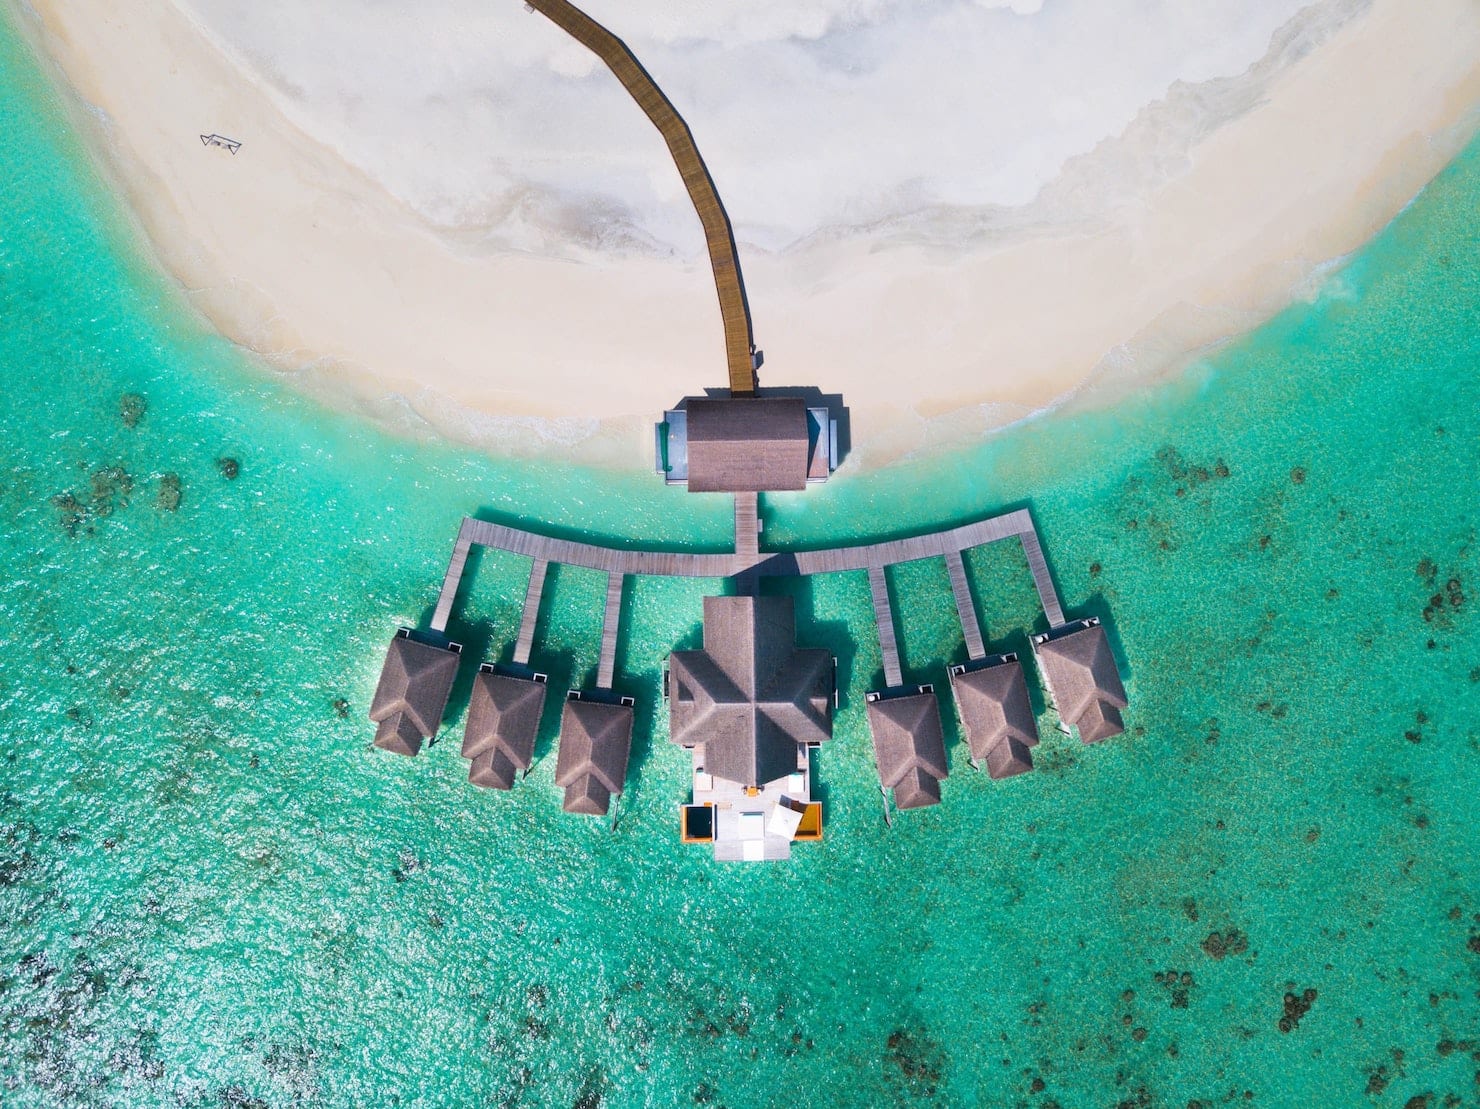 https://uluxeimages.uniqluxe.com/2020/11/maldives-island-resort-luxury-holiday-uniq-luxe.jpg